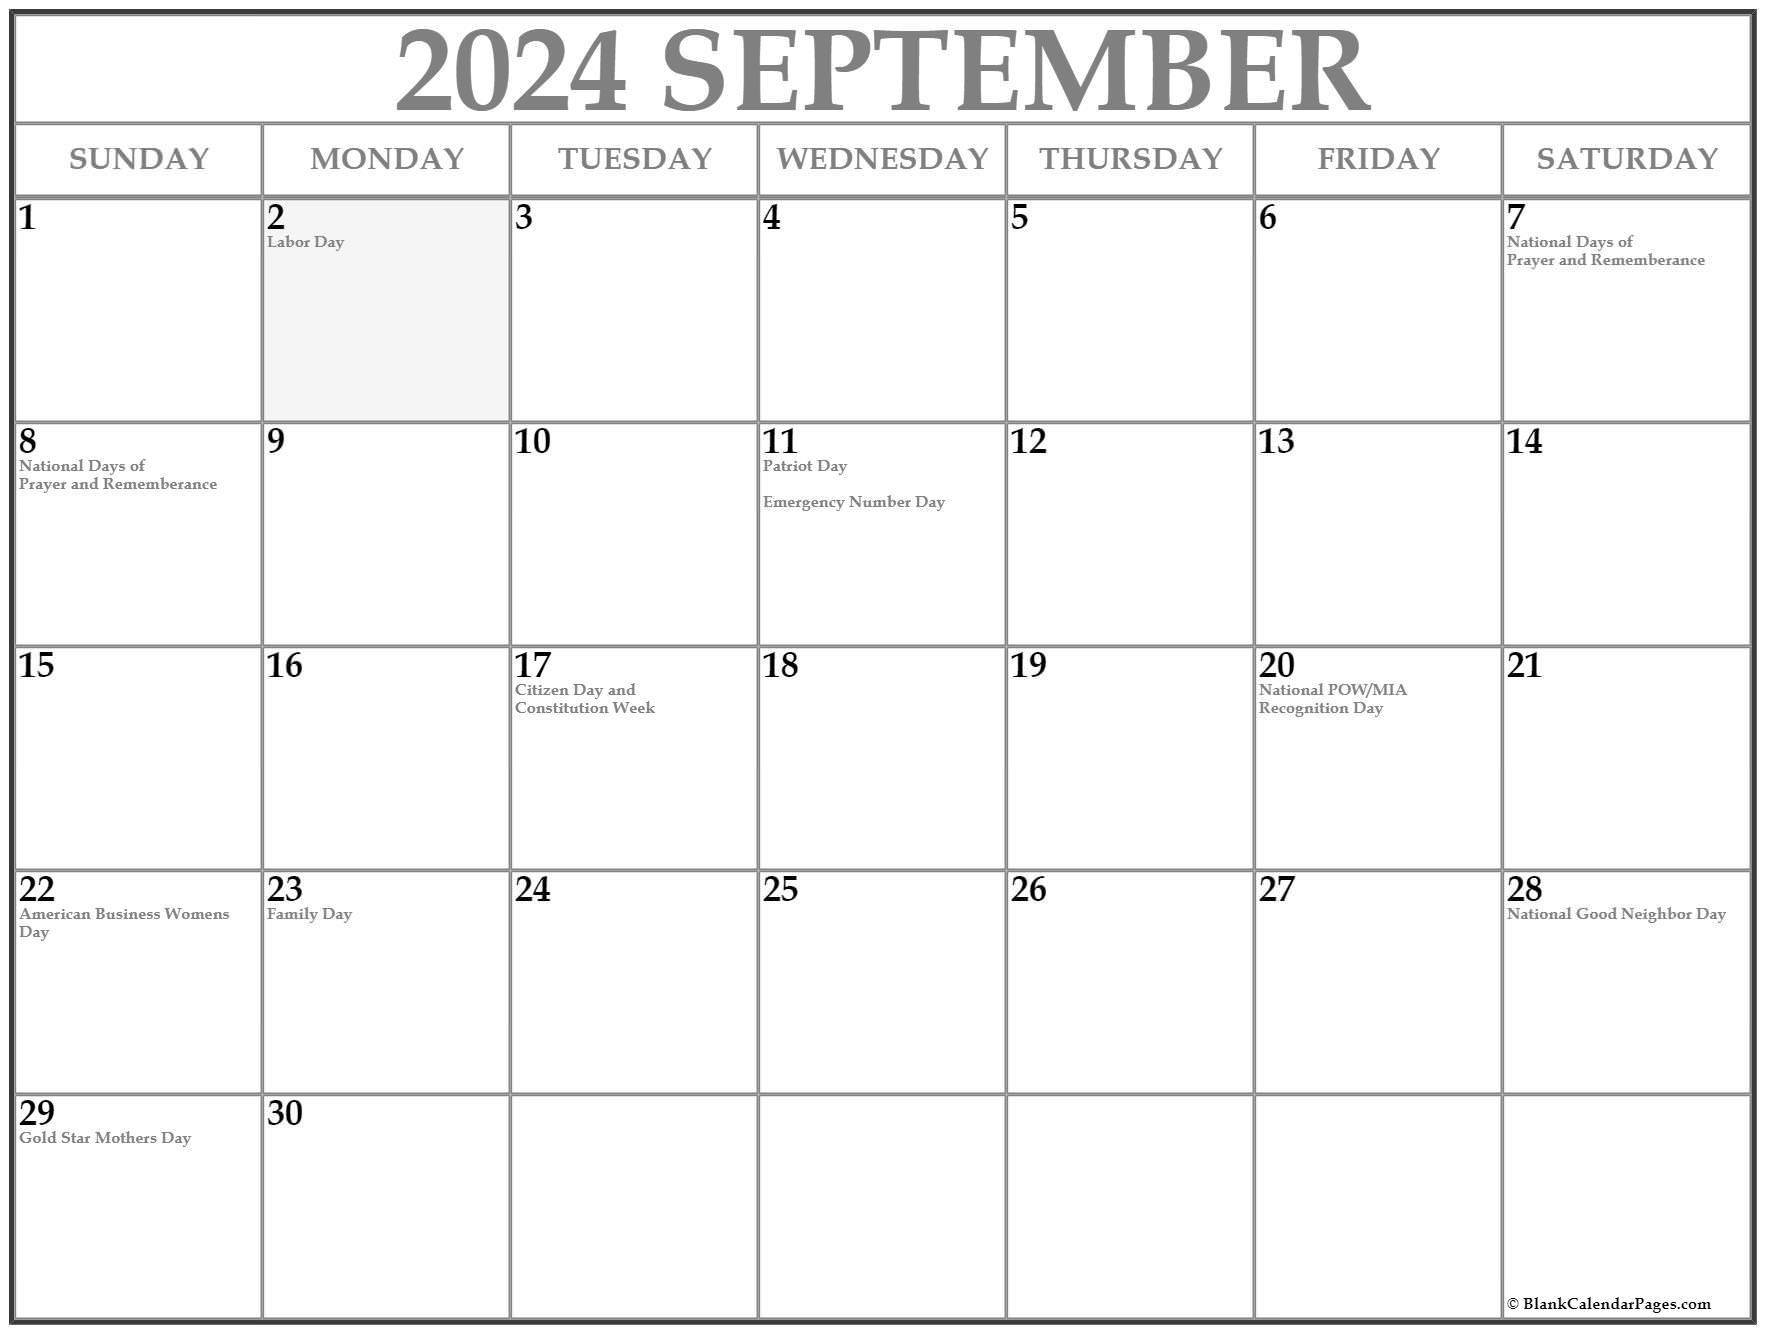 September 2021 calendar with holidays